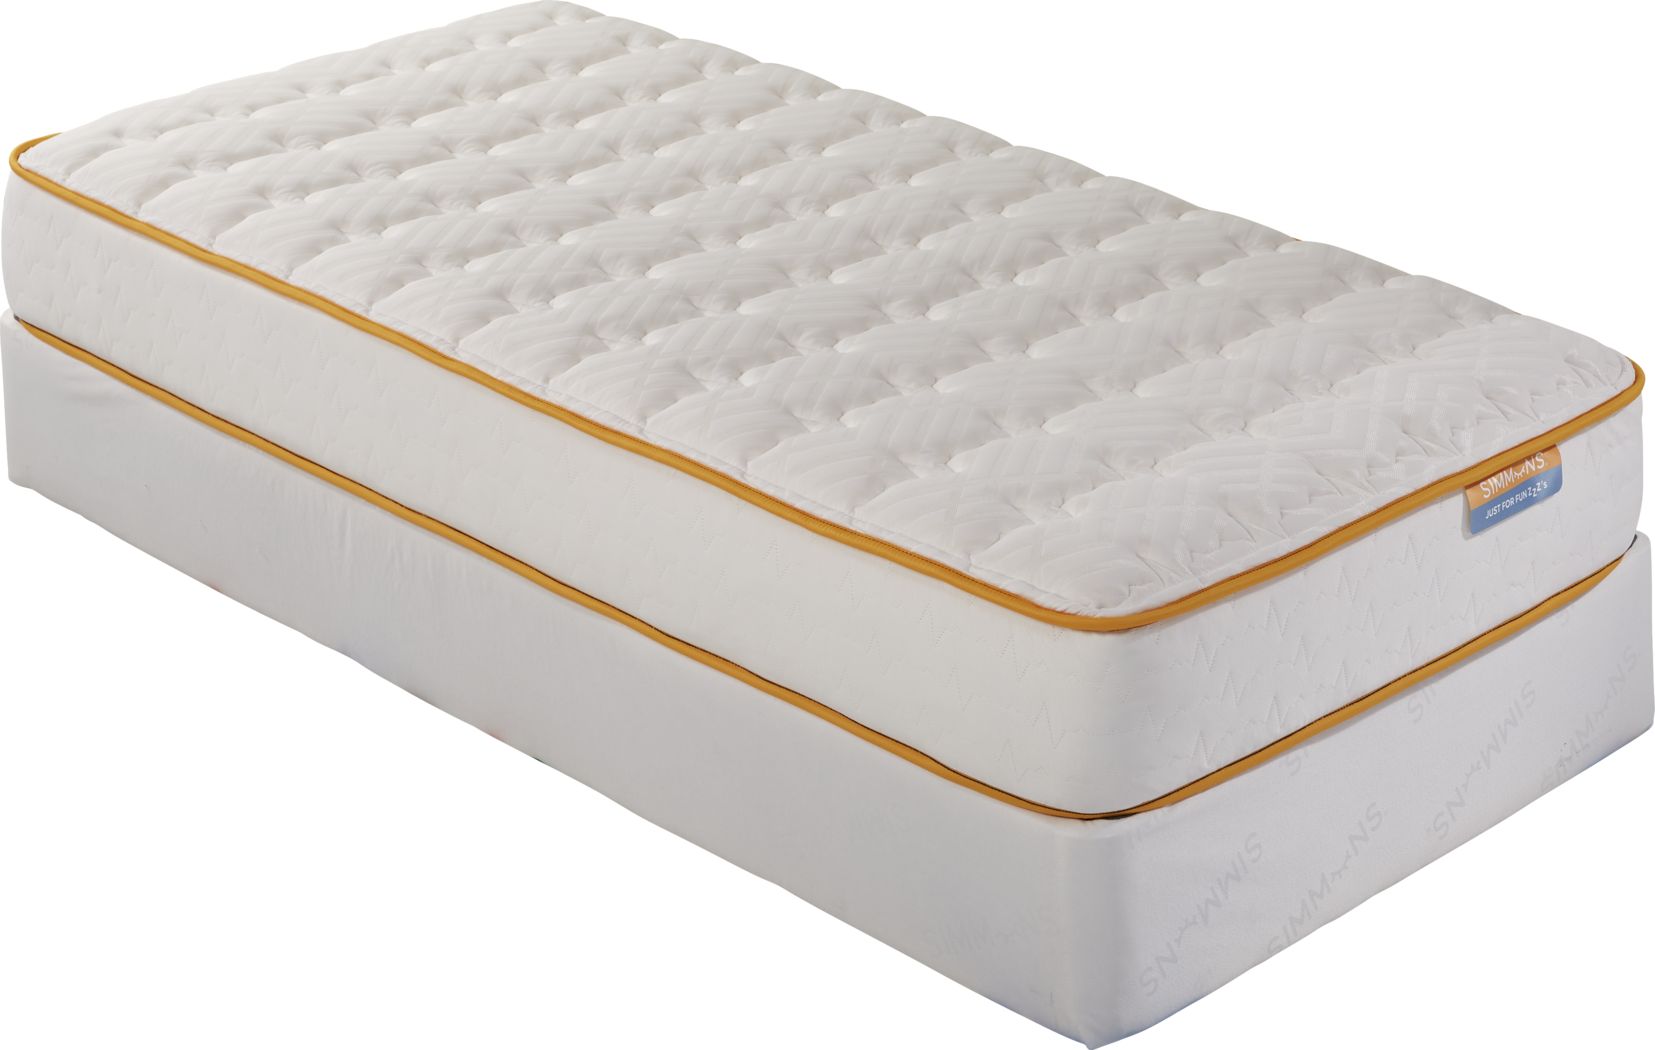 simmons sleepers choice twin mattress